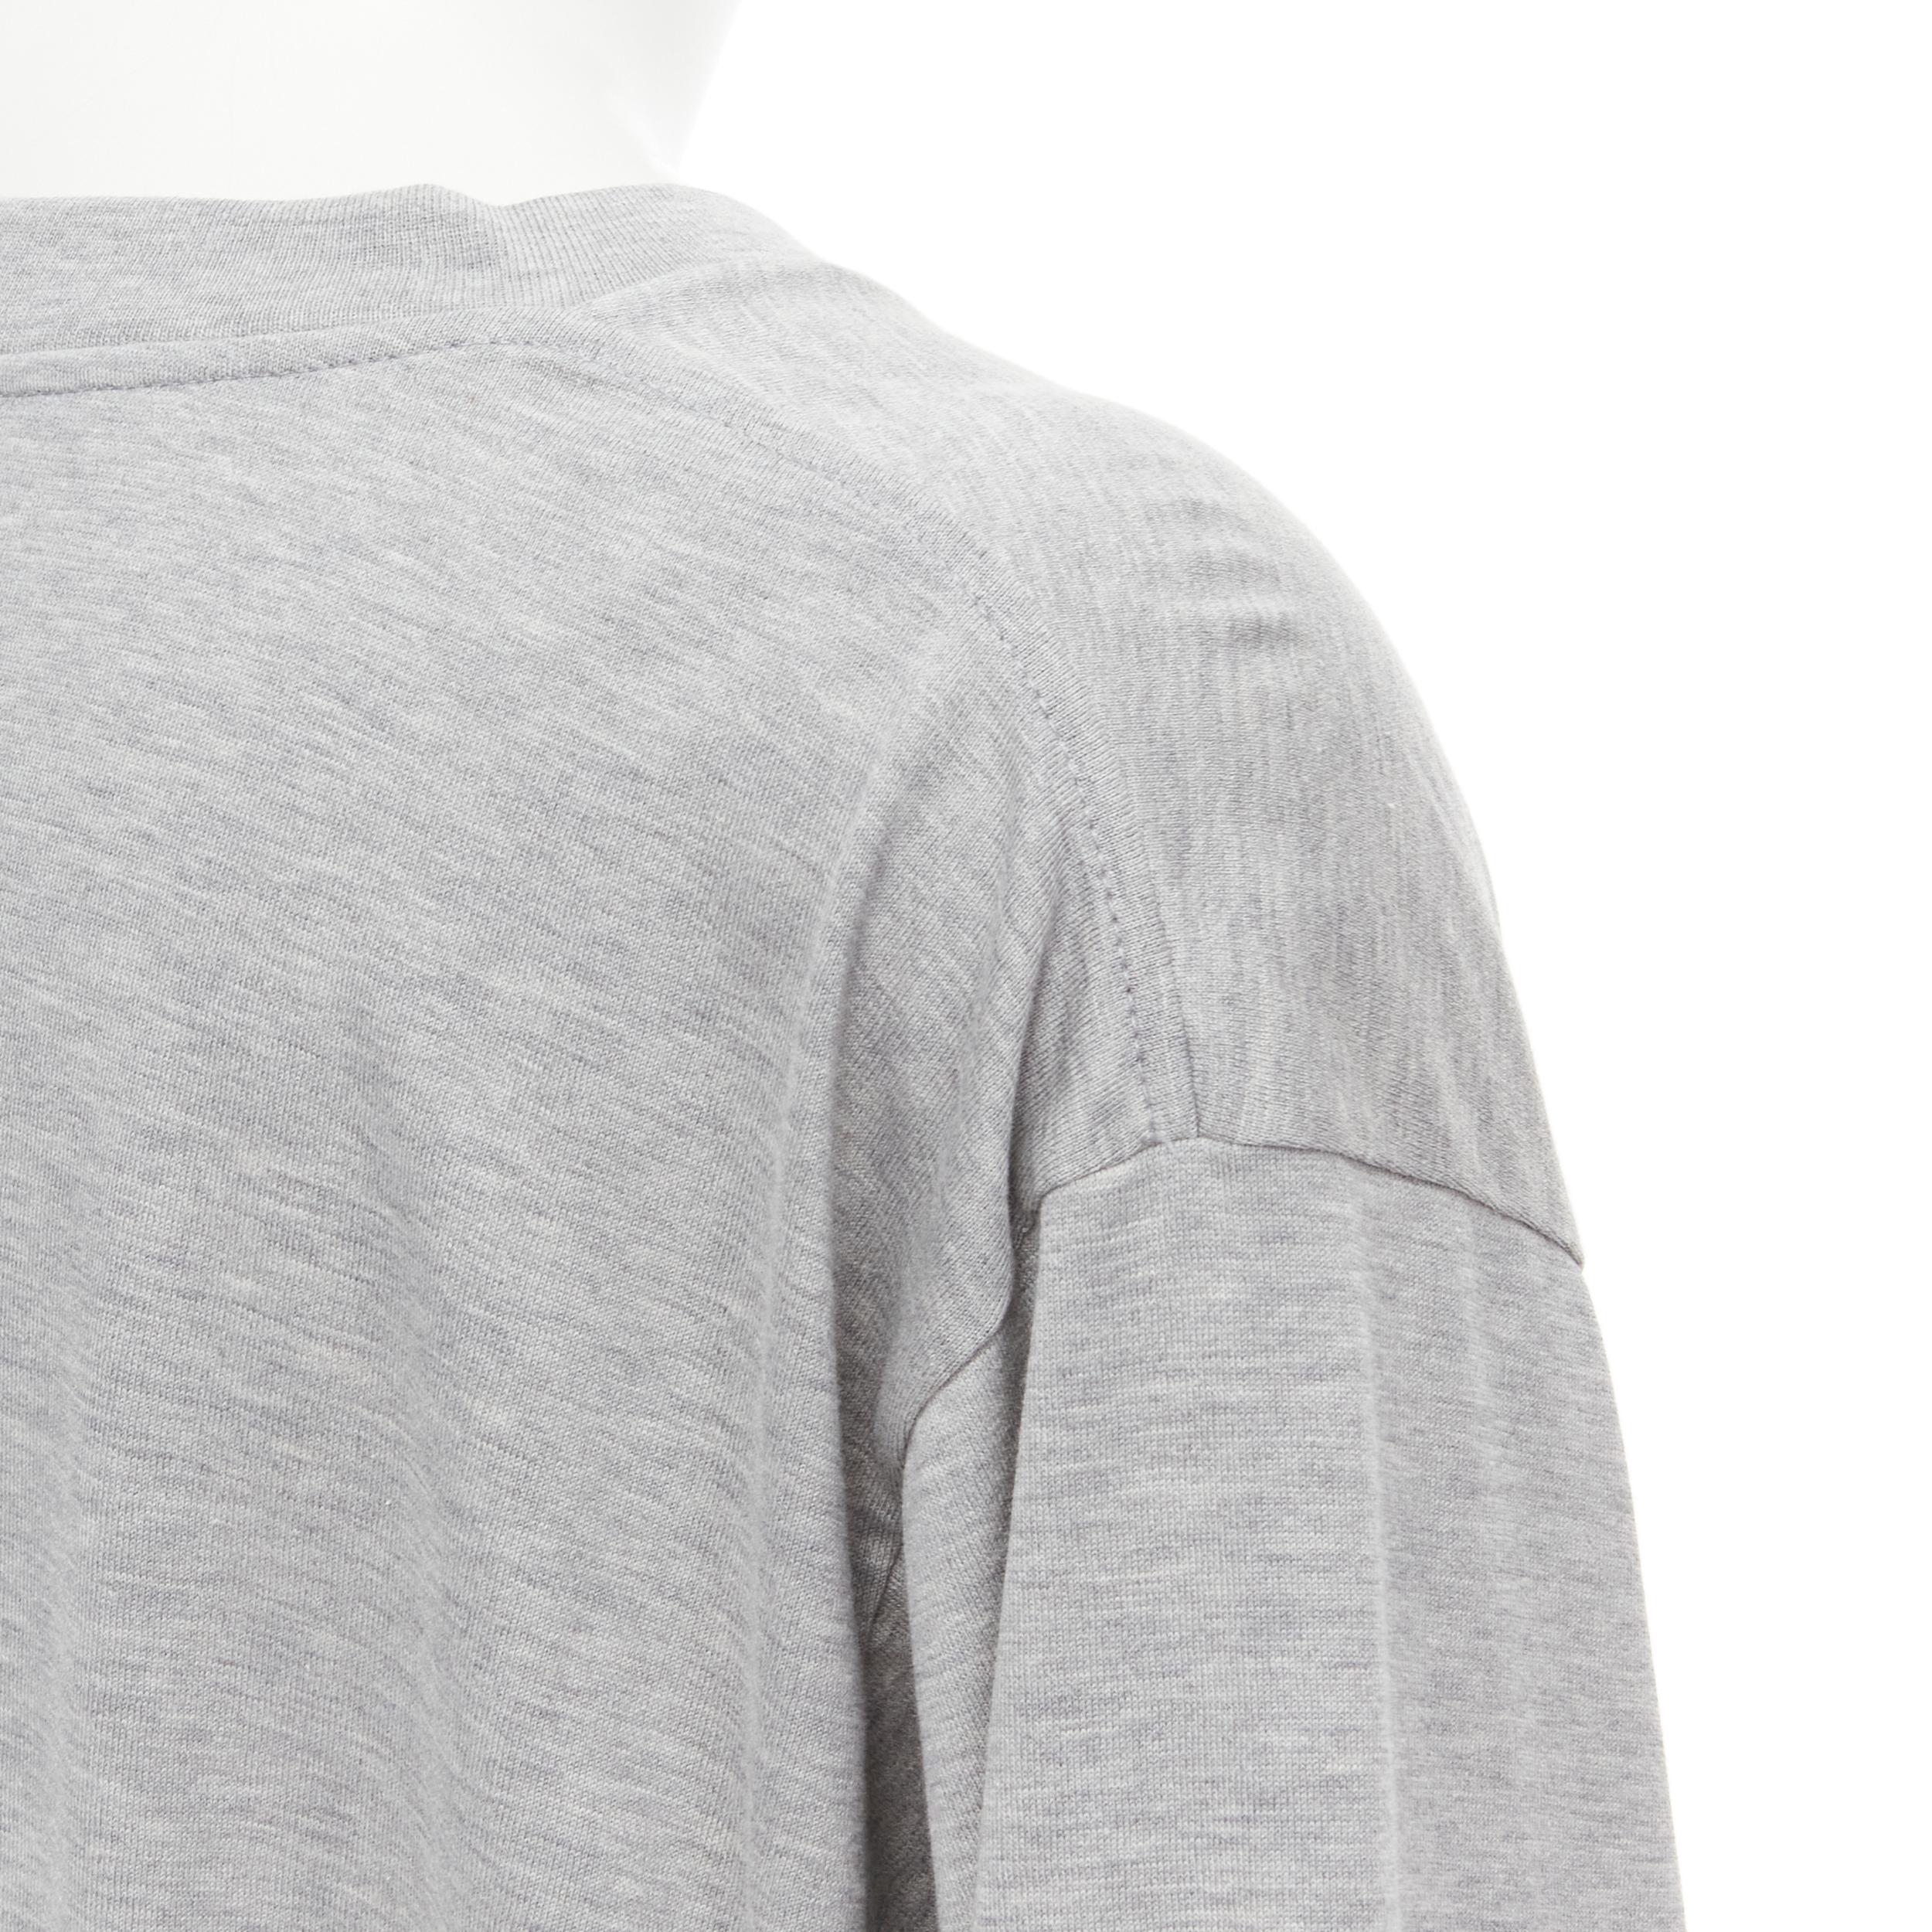 Gray new CELINE Hedi Slimane 100% cotton College logo cropped tshirt S